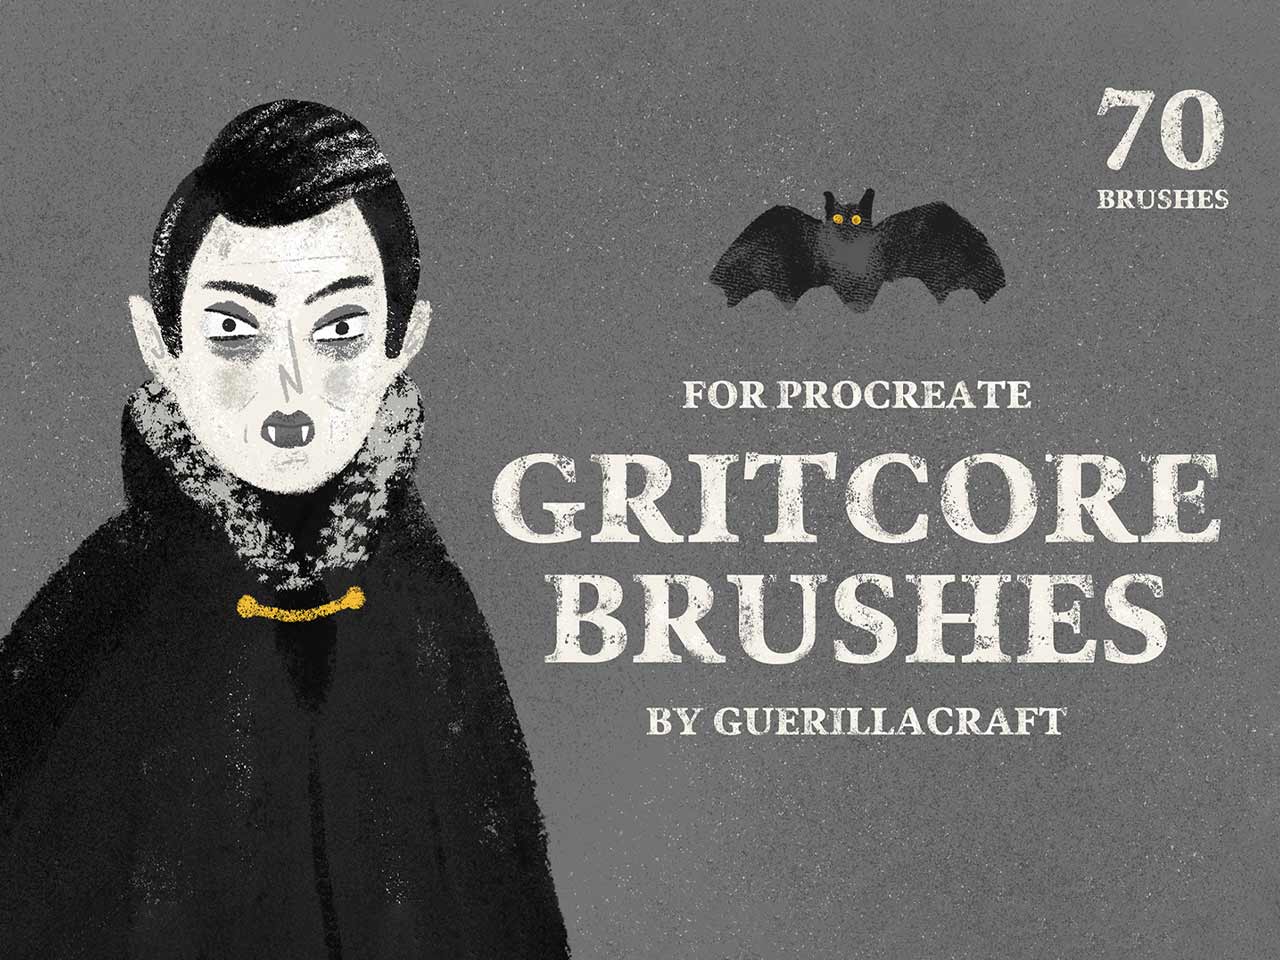 A free gritcore procreate brushes